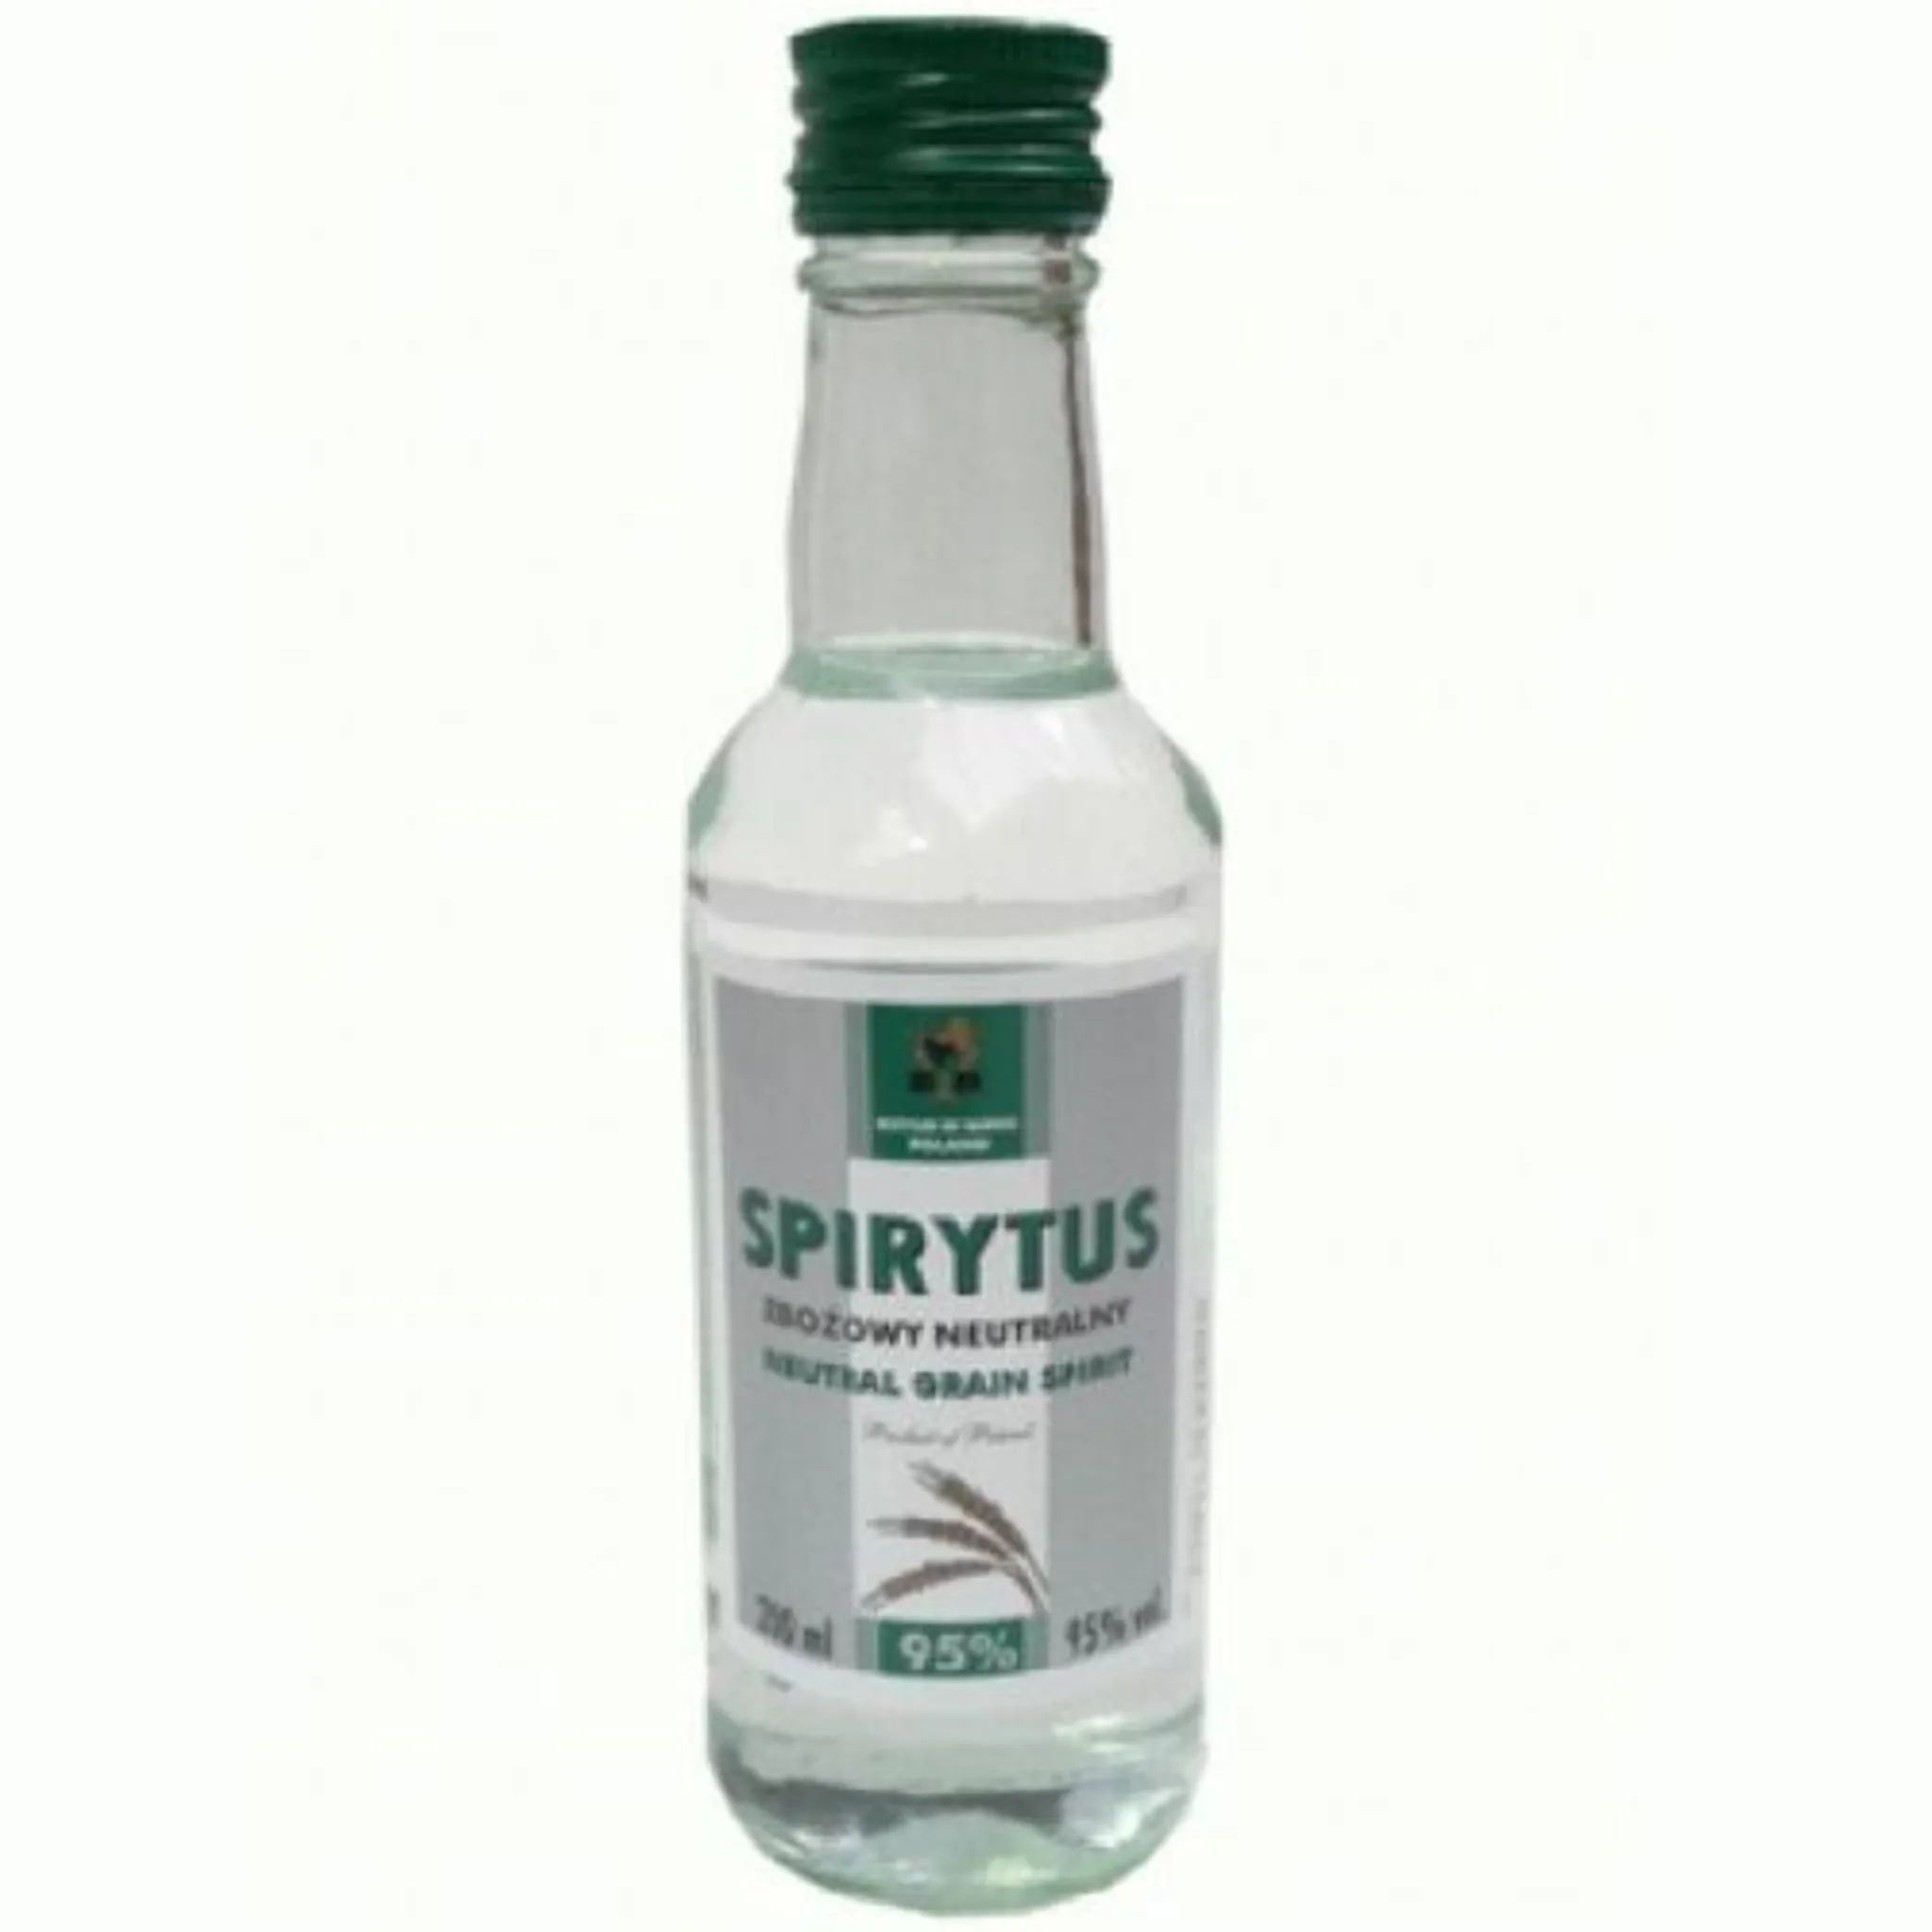 Sprit Spirytus - Trinkalkohol 0,2L polnischer